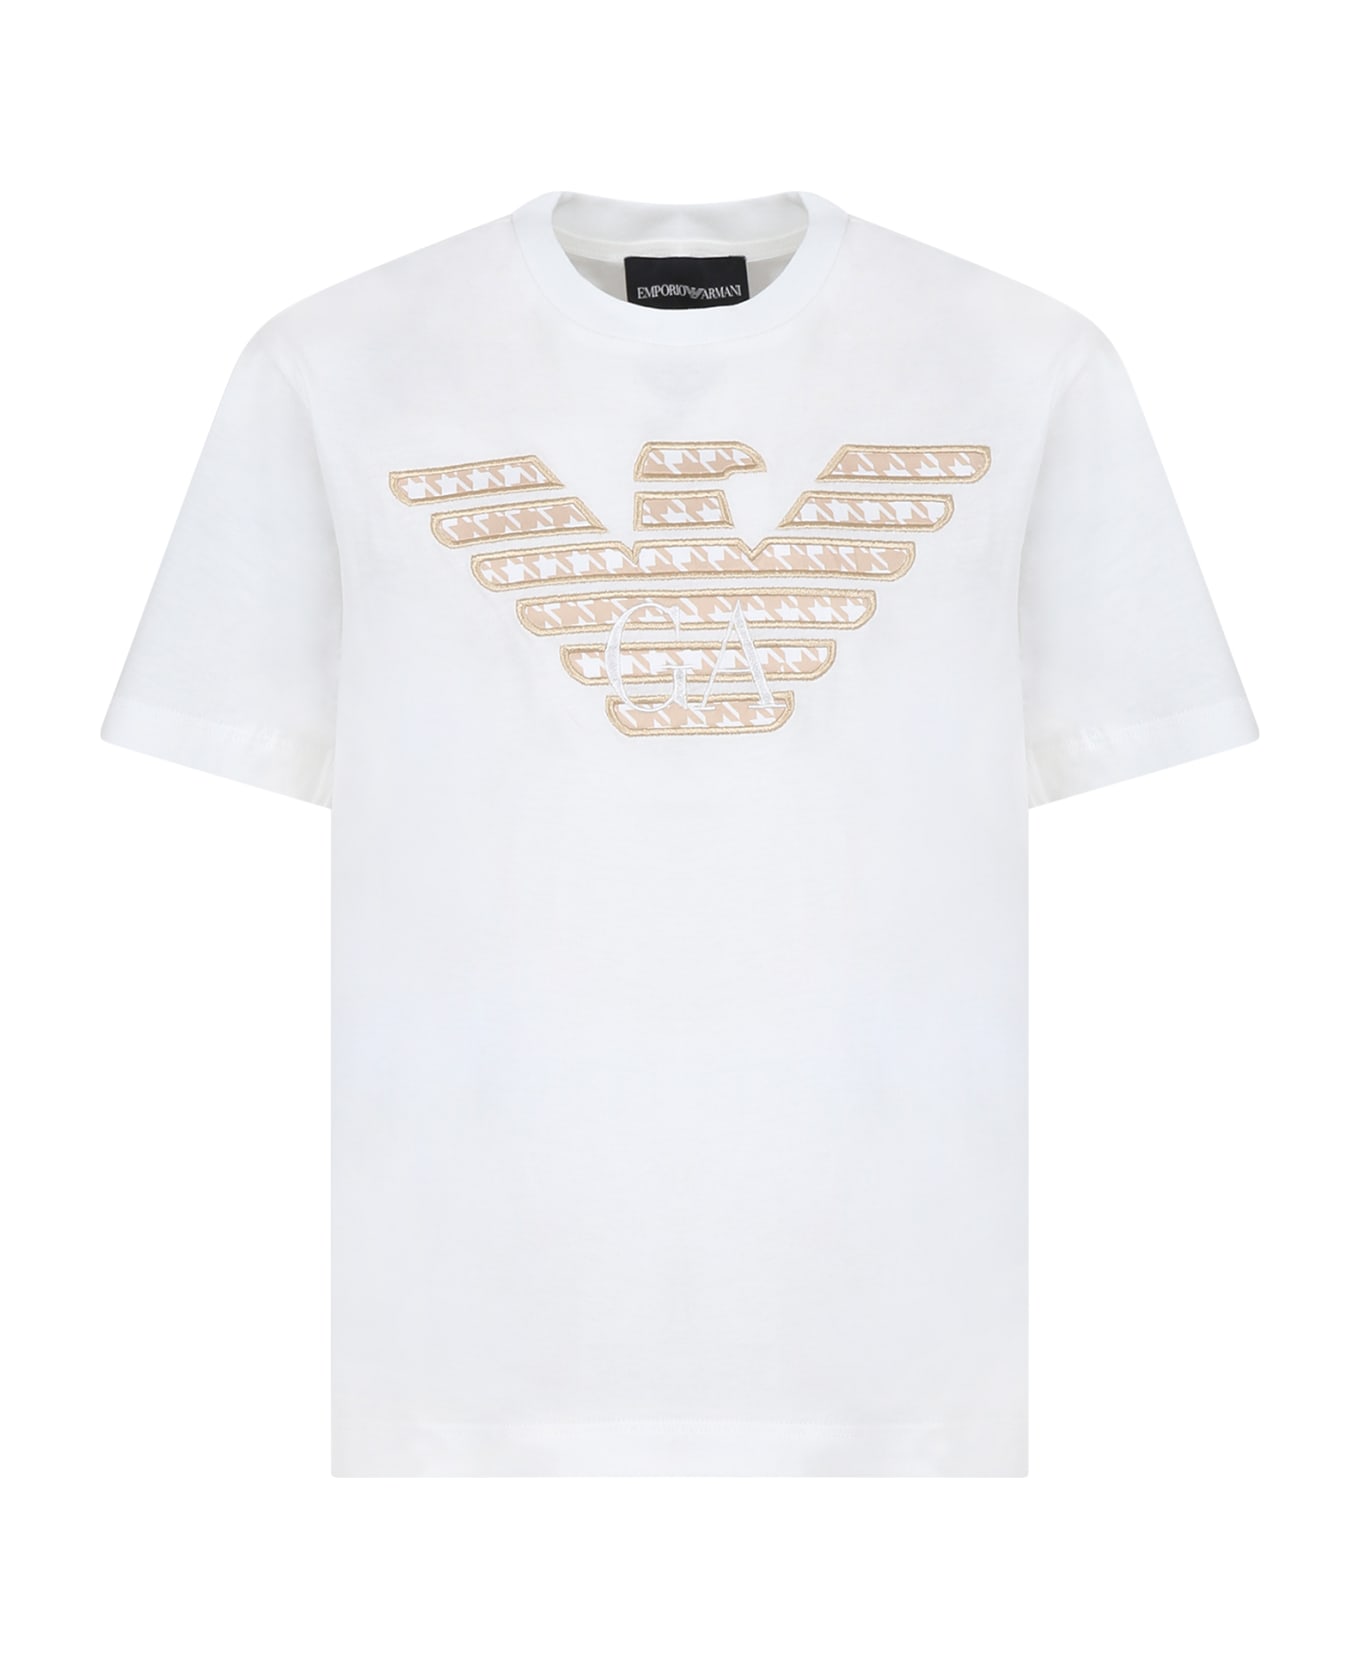 Armani Collezioni White T-shirt For Boy With Eagle - White